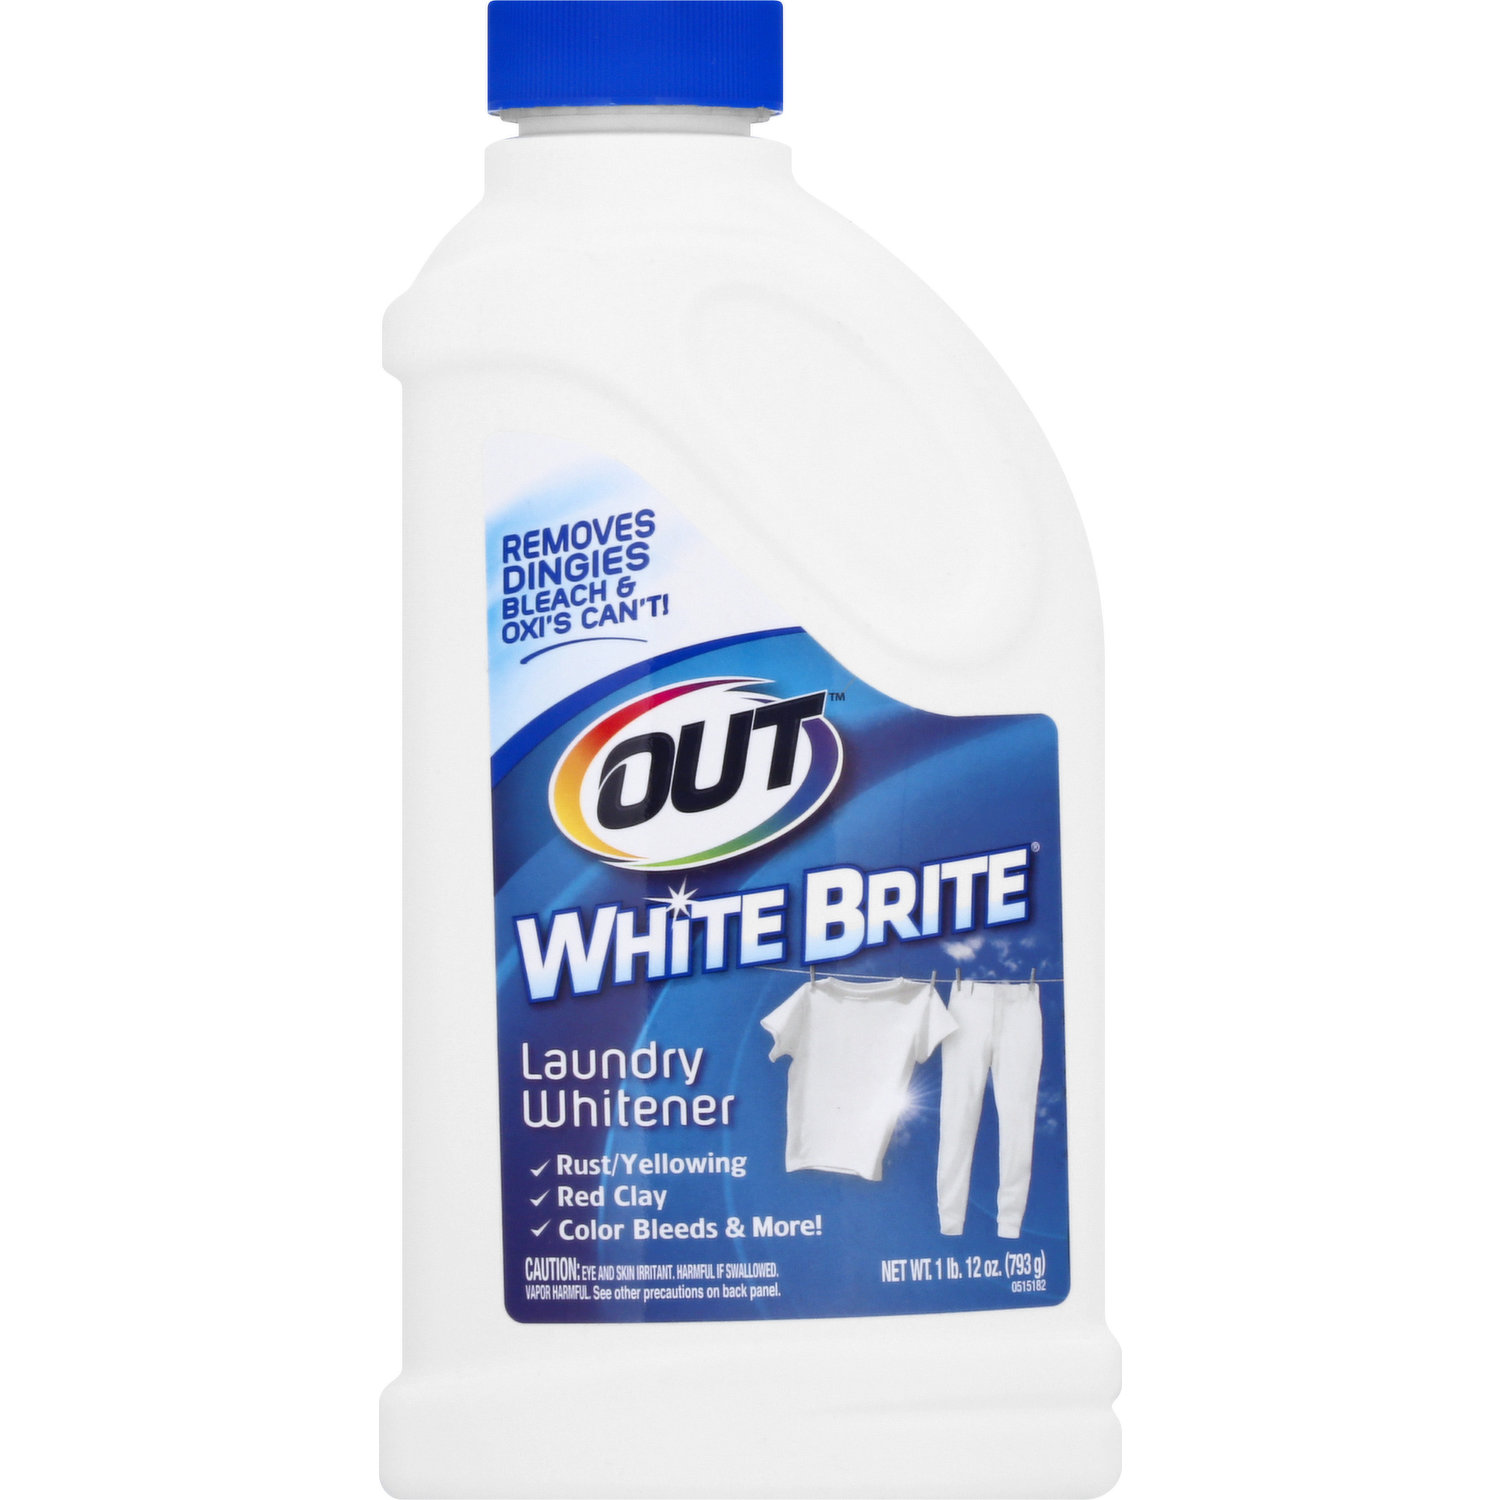 OUT White Brite Laundry Whitener, 1 lb. 12 oz. Bottle 